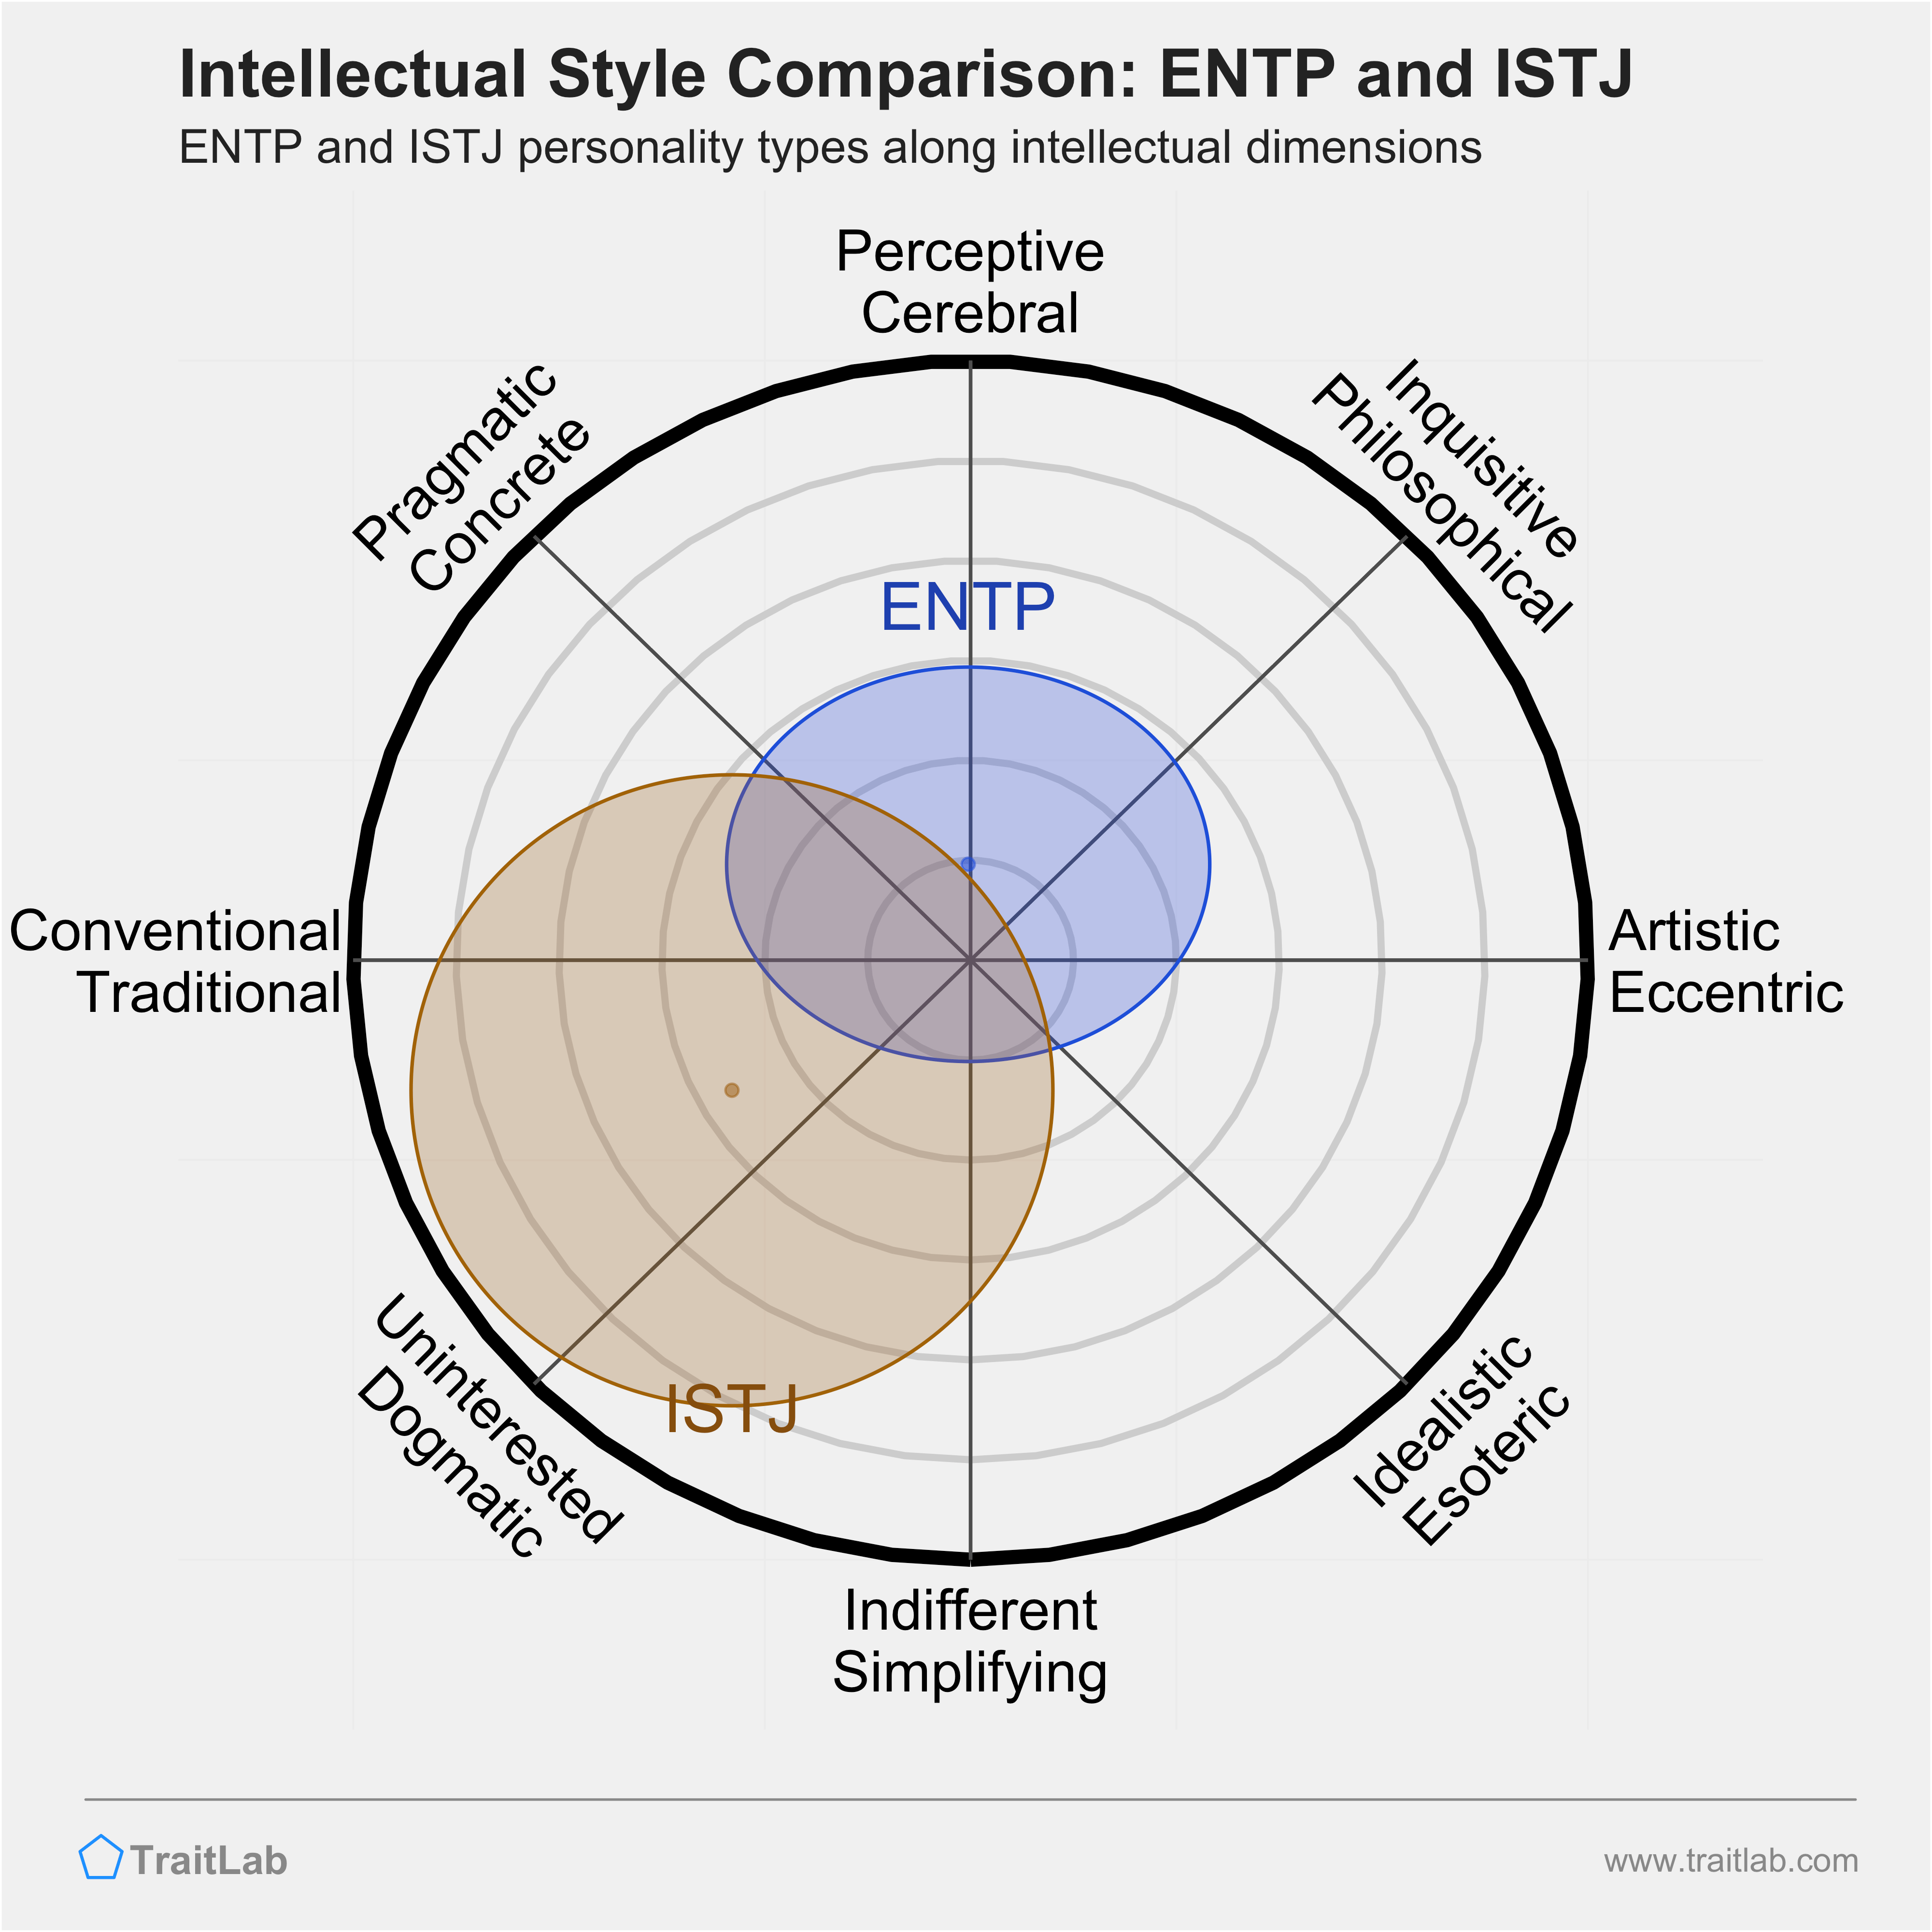 ENTP and ISTJ comparison across intellectual dimensions